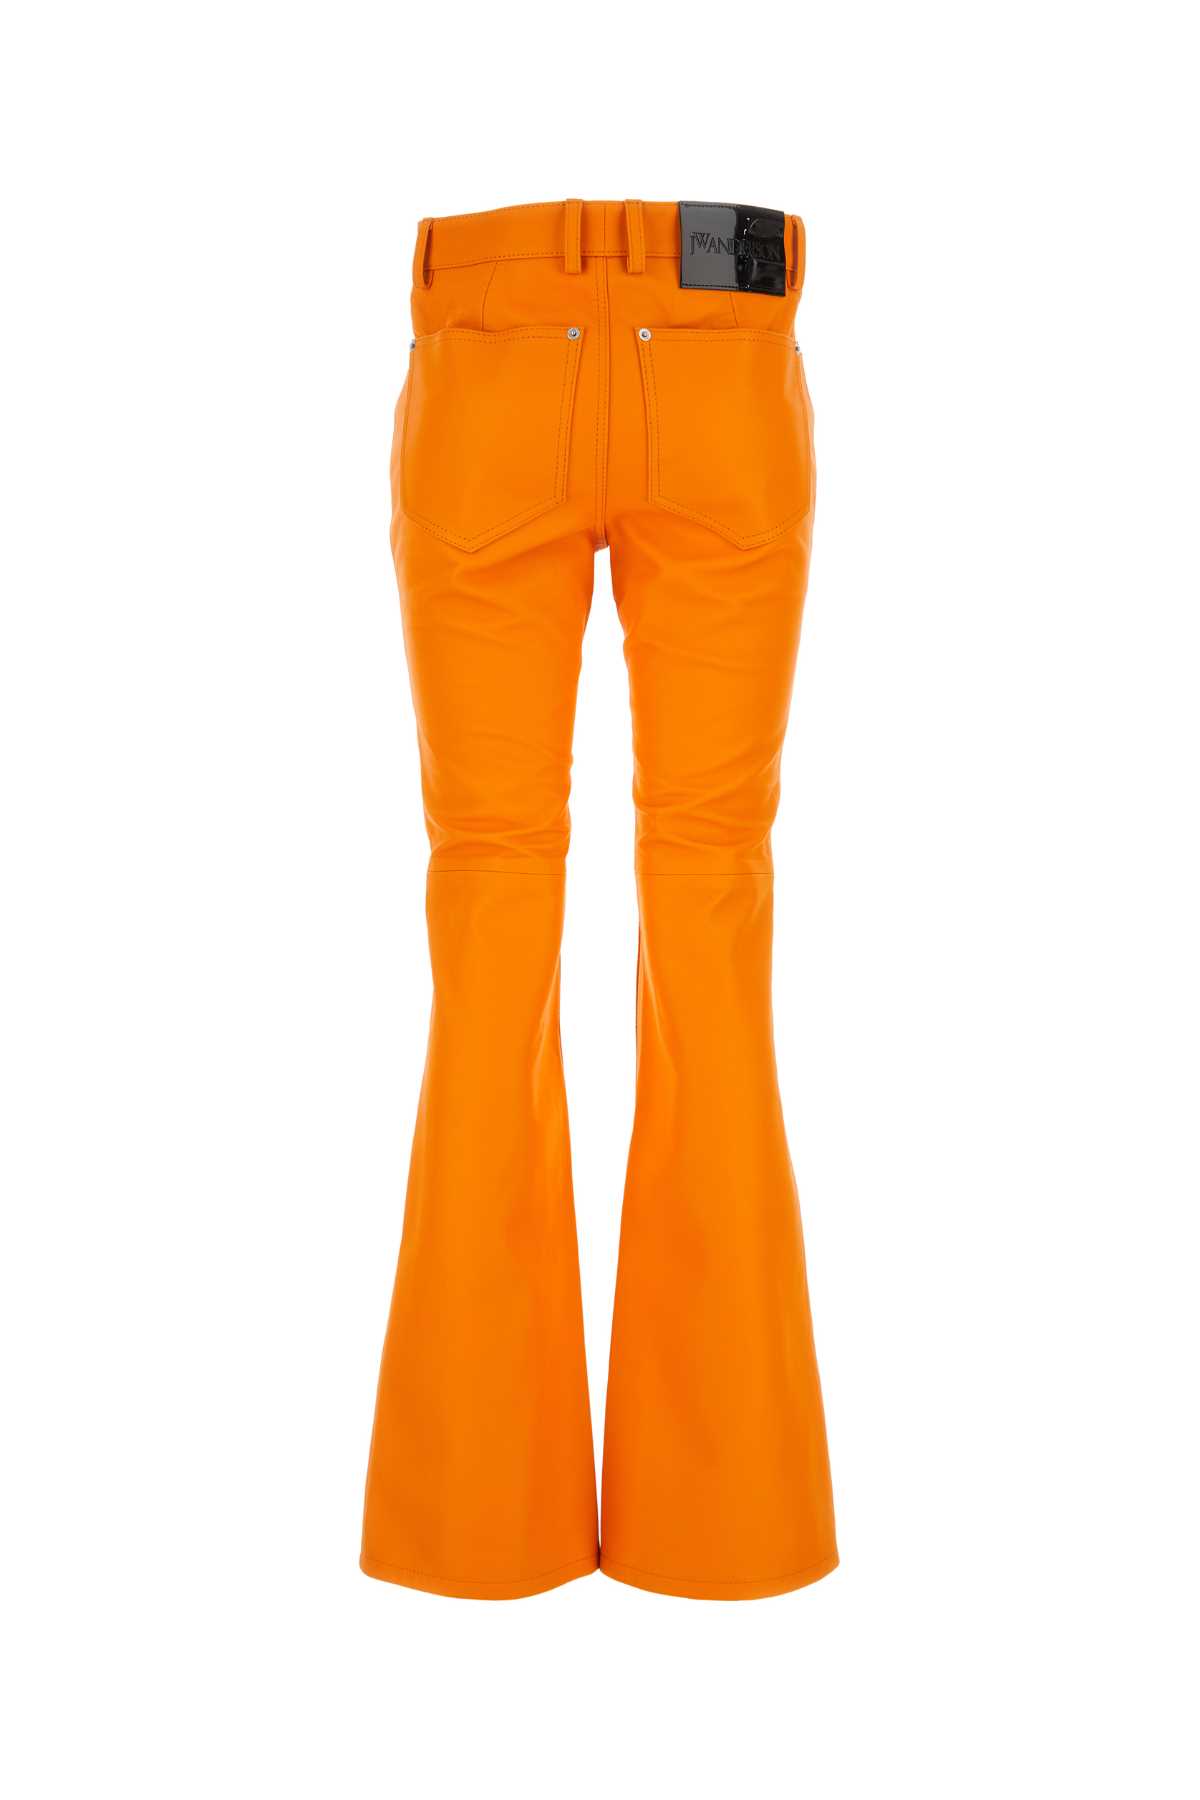 Jw Anderson Orange Leather Trouser